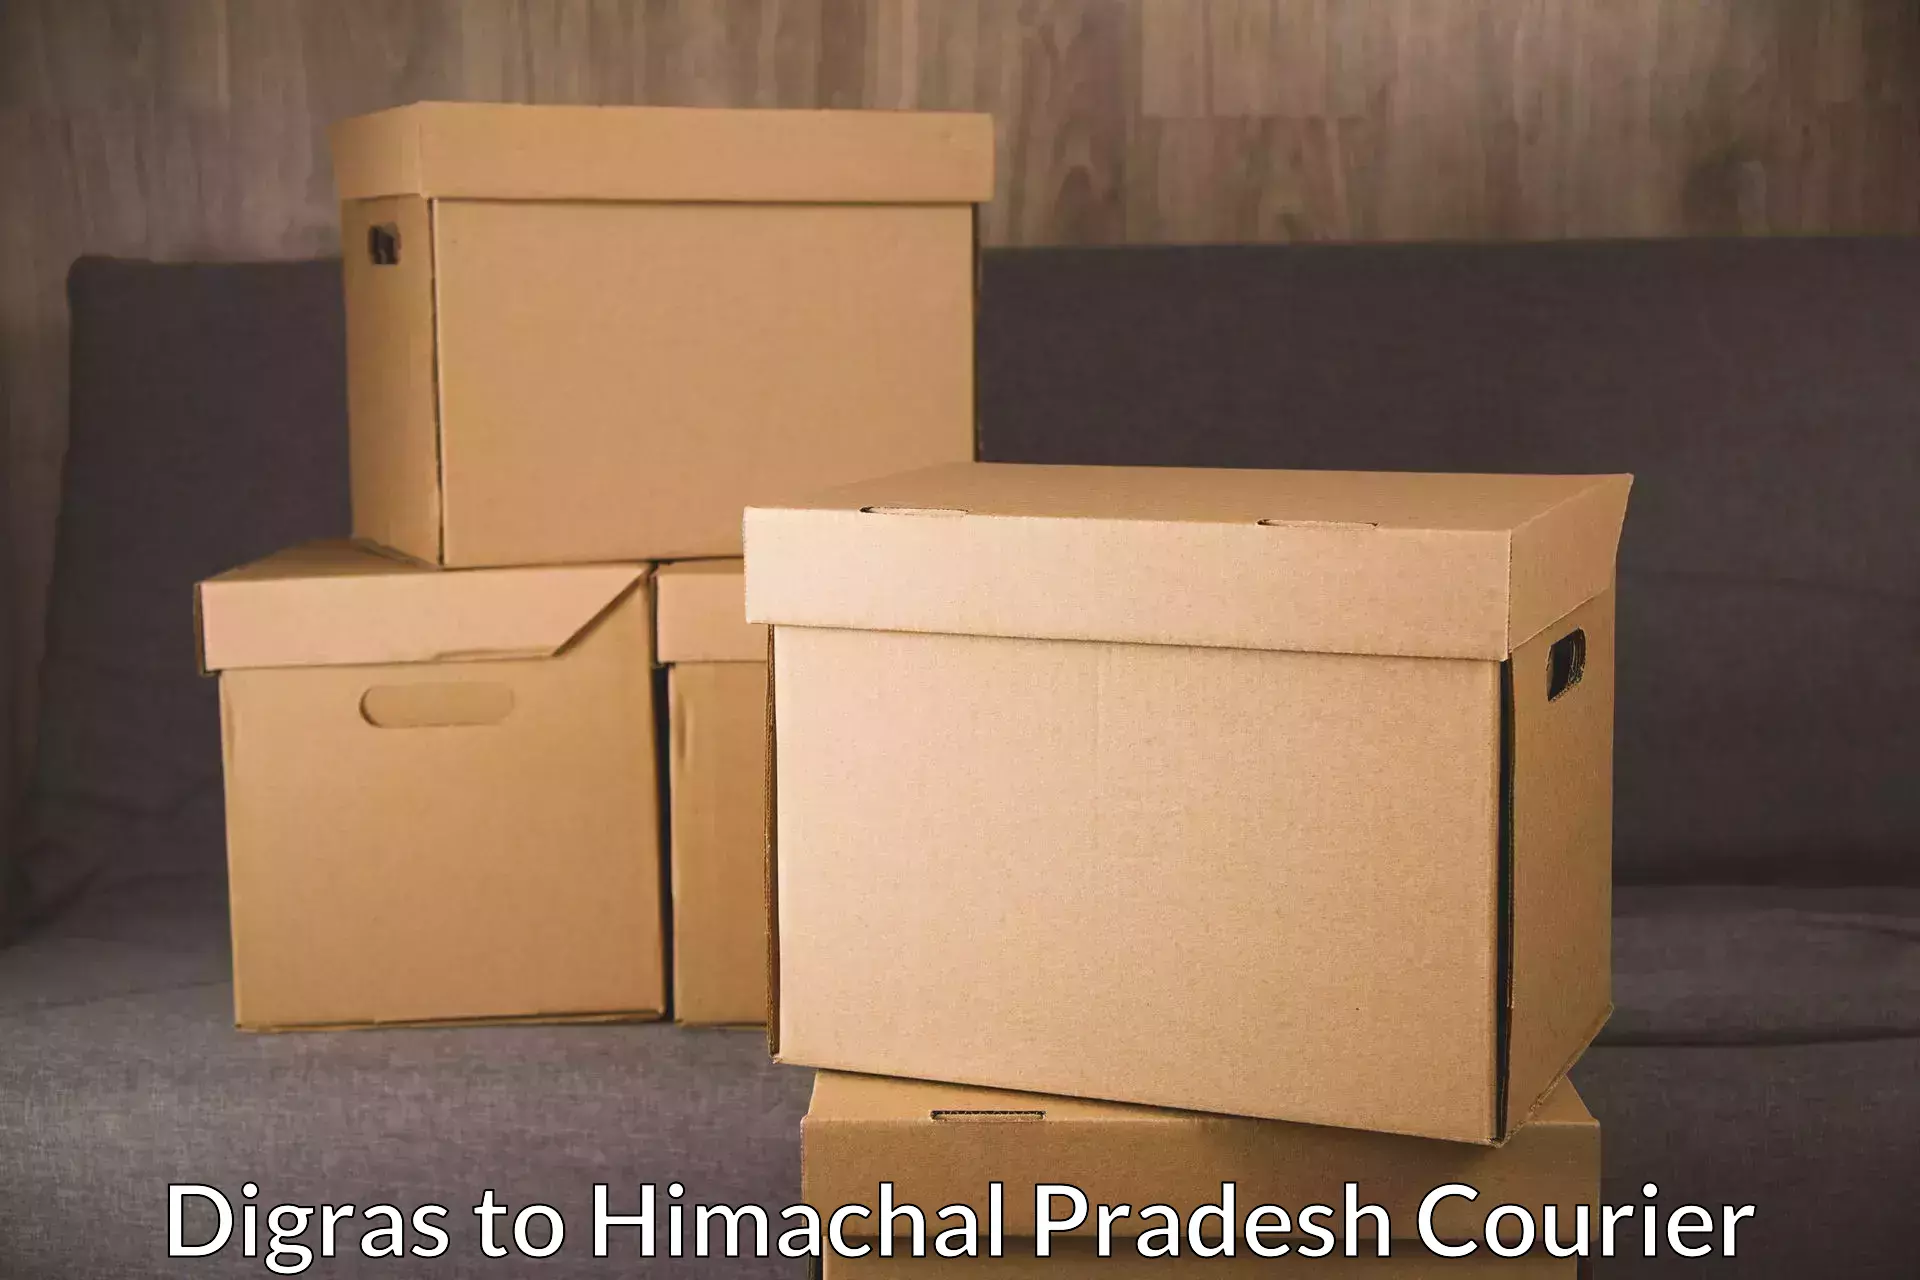 Courier service partnerships Digras to Himachal Pradesh